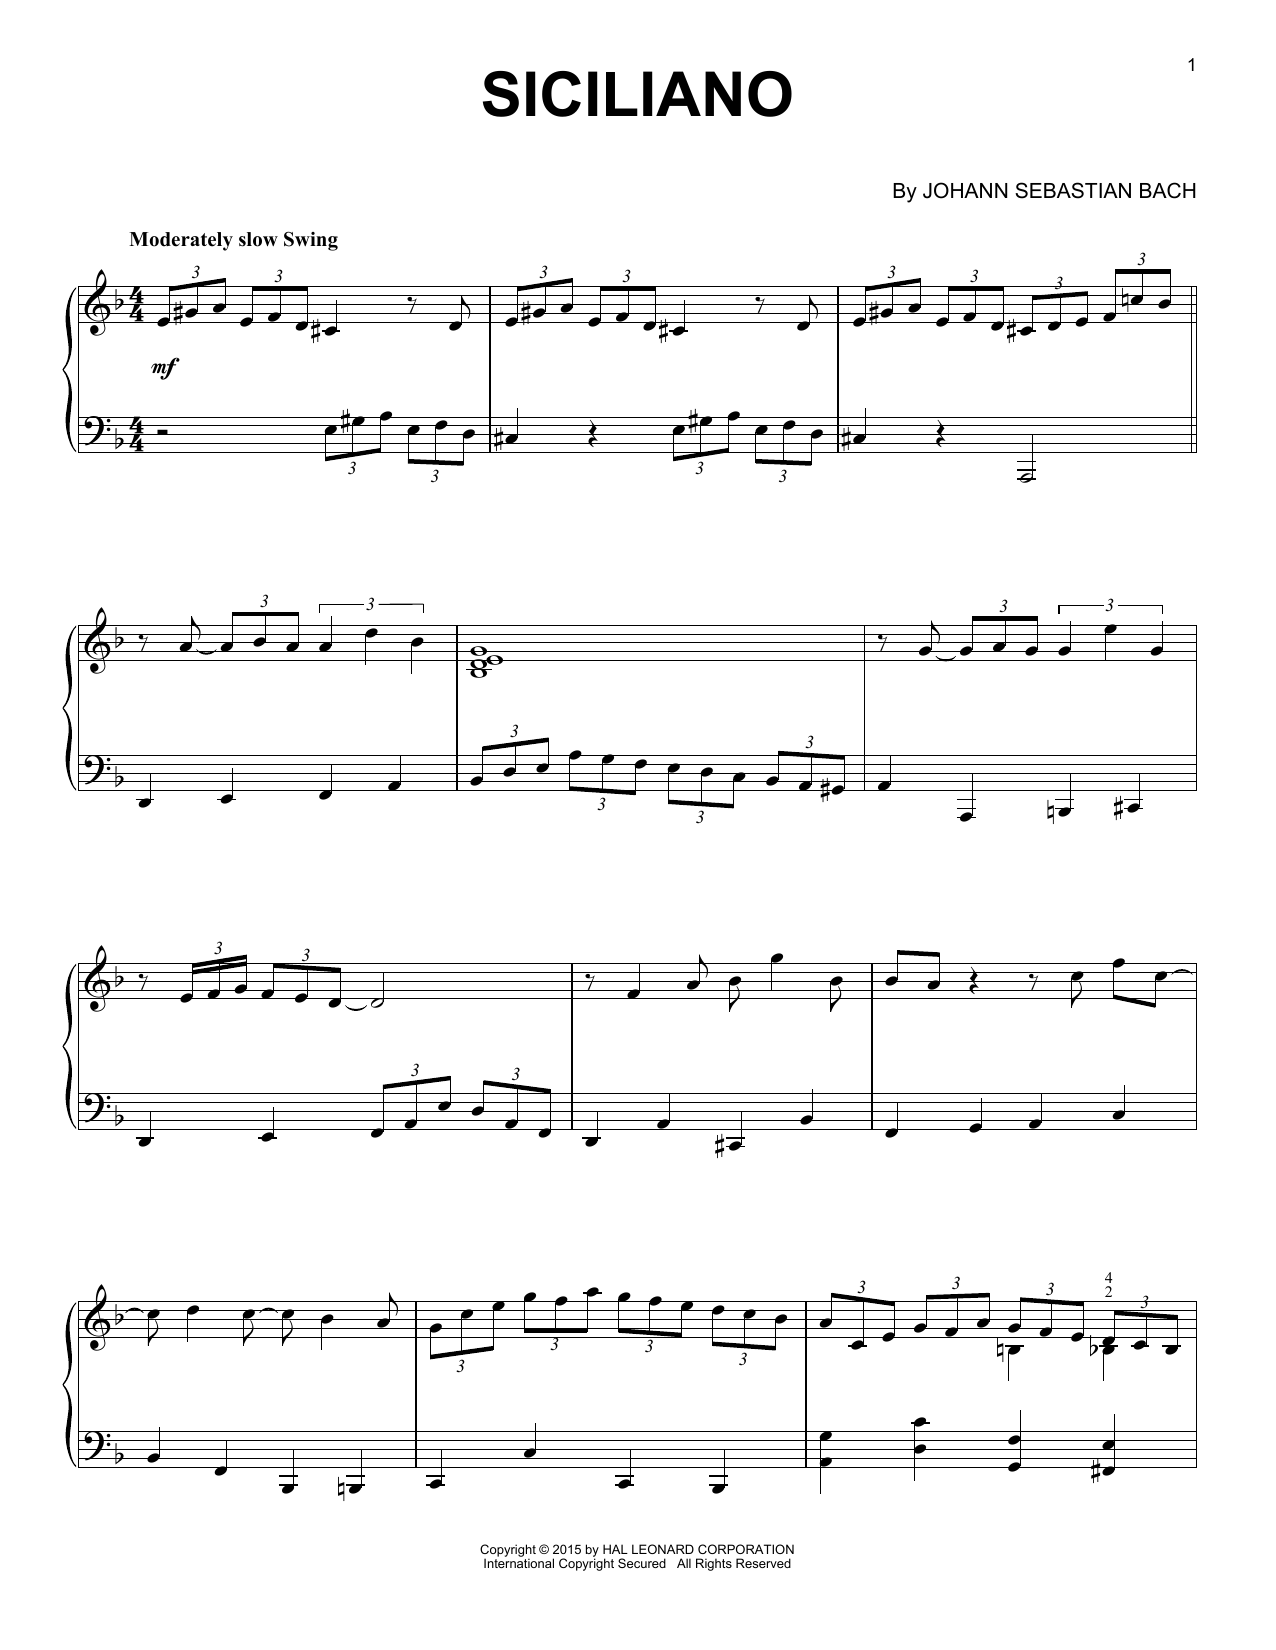 Johann Sebastian Bach Siciliano [Jazz version] Sheet Music Notes & Chords for Piano - Download or Print PDF